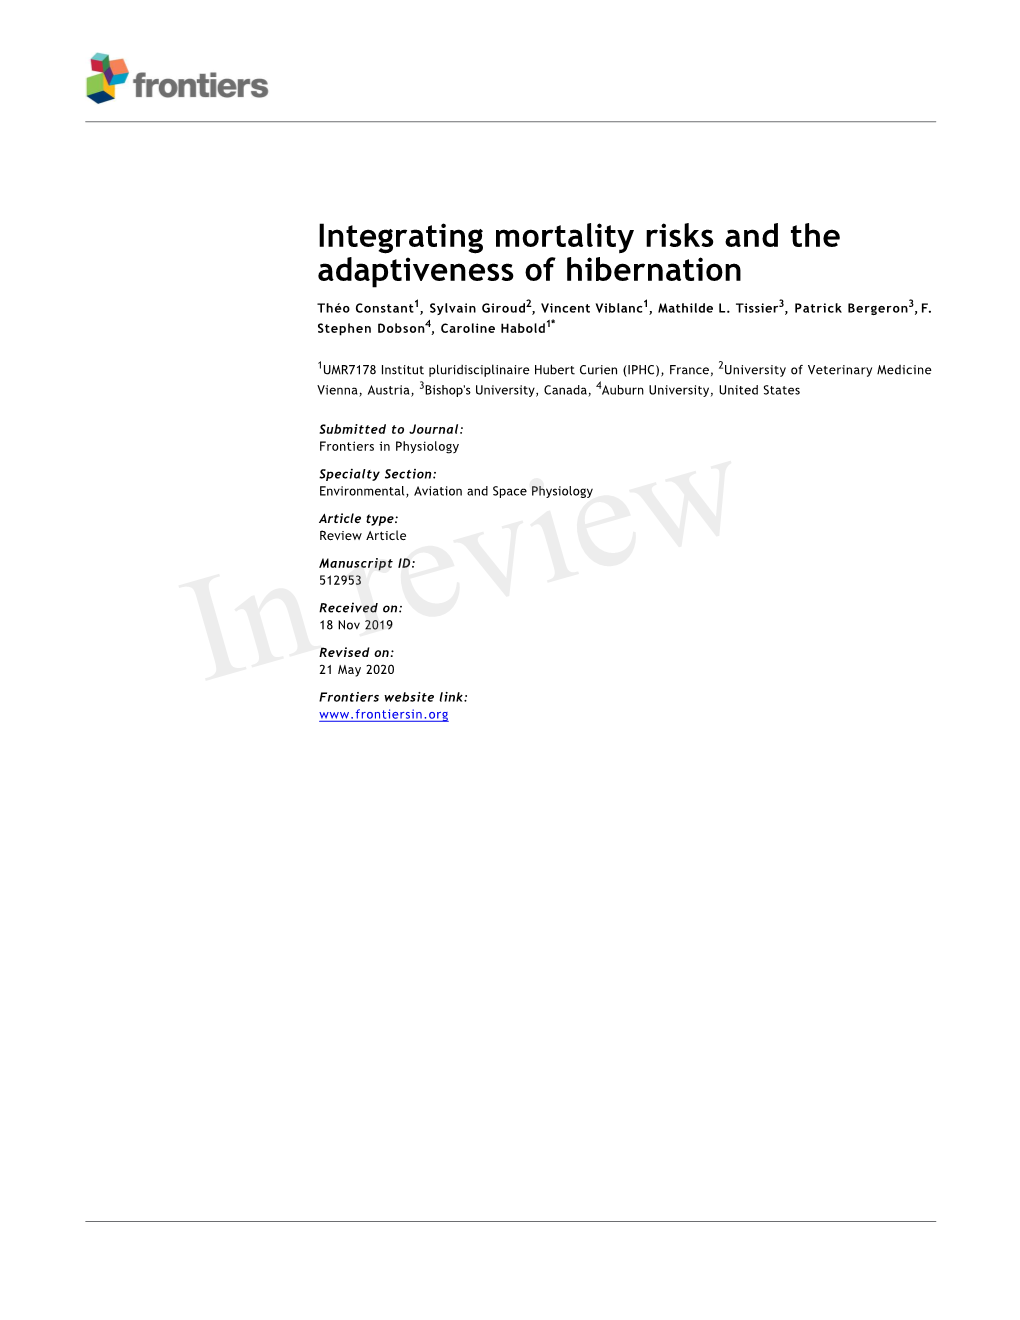 Integrating Mortality Risks and the Adaptiveness of Hibernation